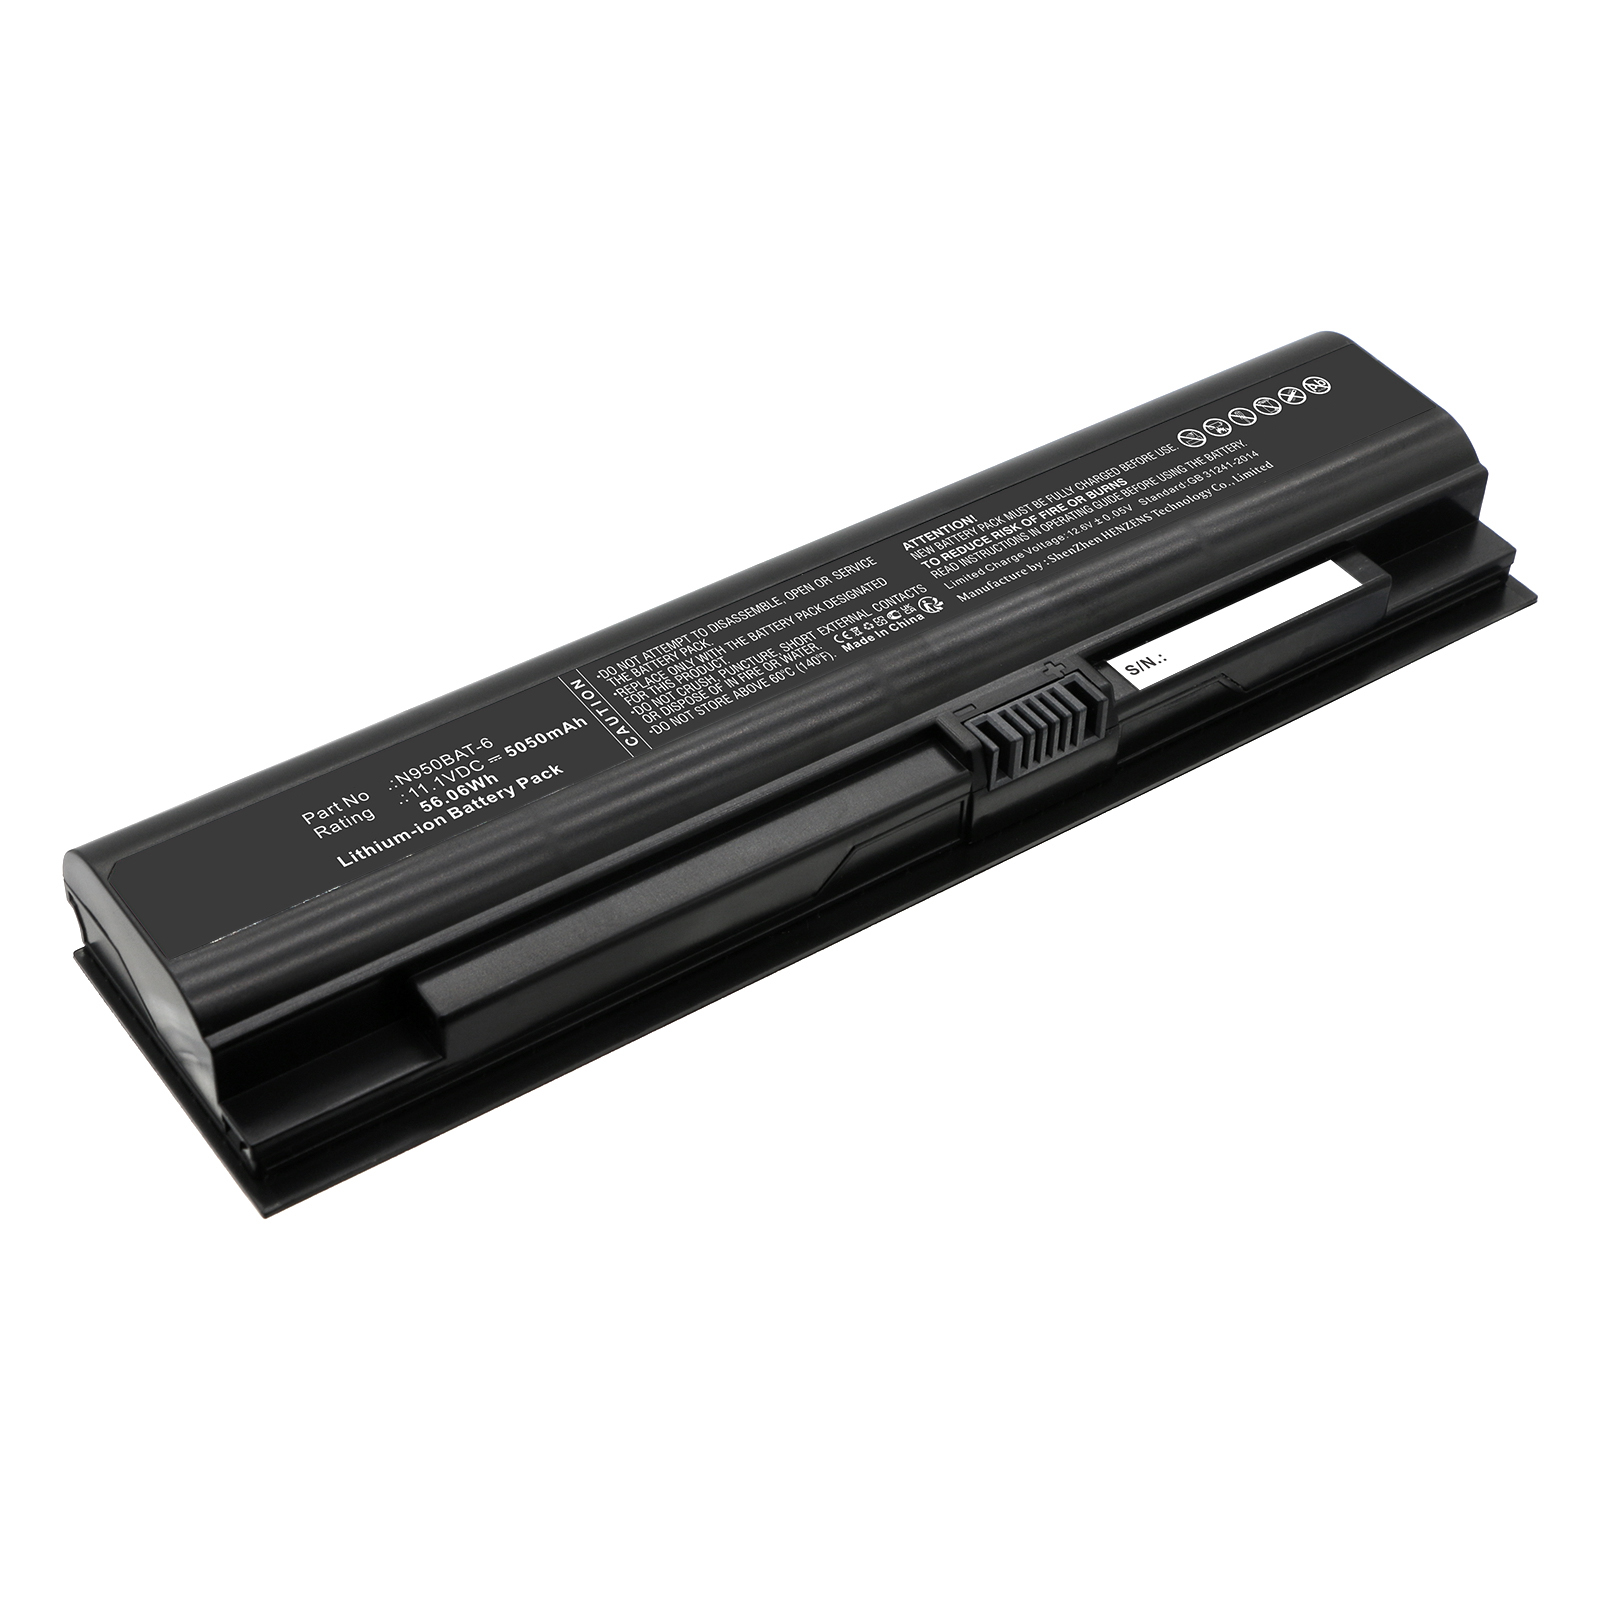 Synergy Digital Laptop Battery, Compatible with Clevo N950BAT-6 Laptop Battery (Li-ion, 11.1V, 5050mAh)